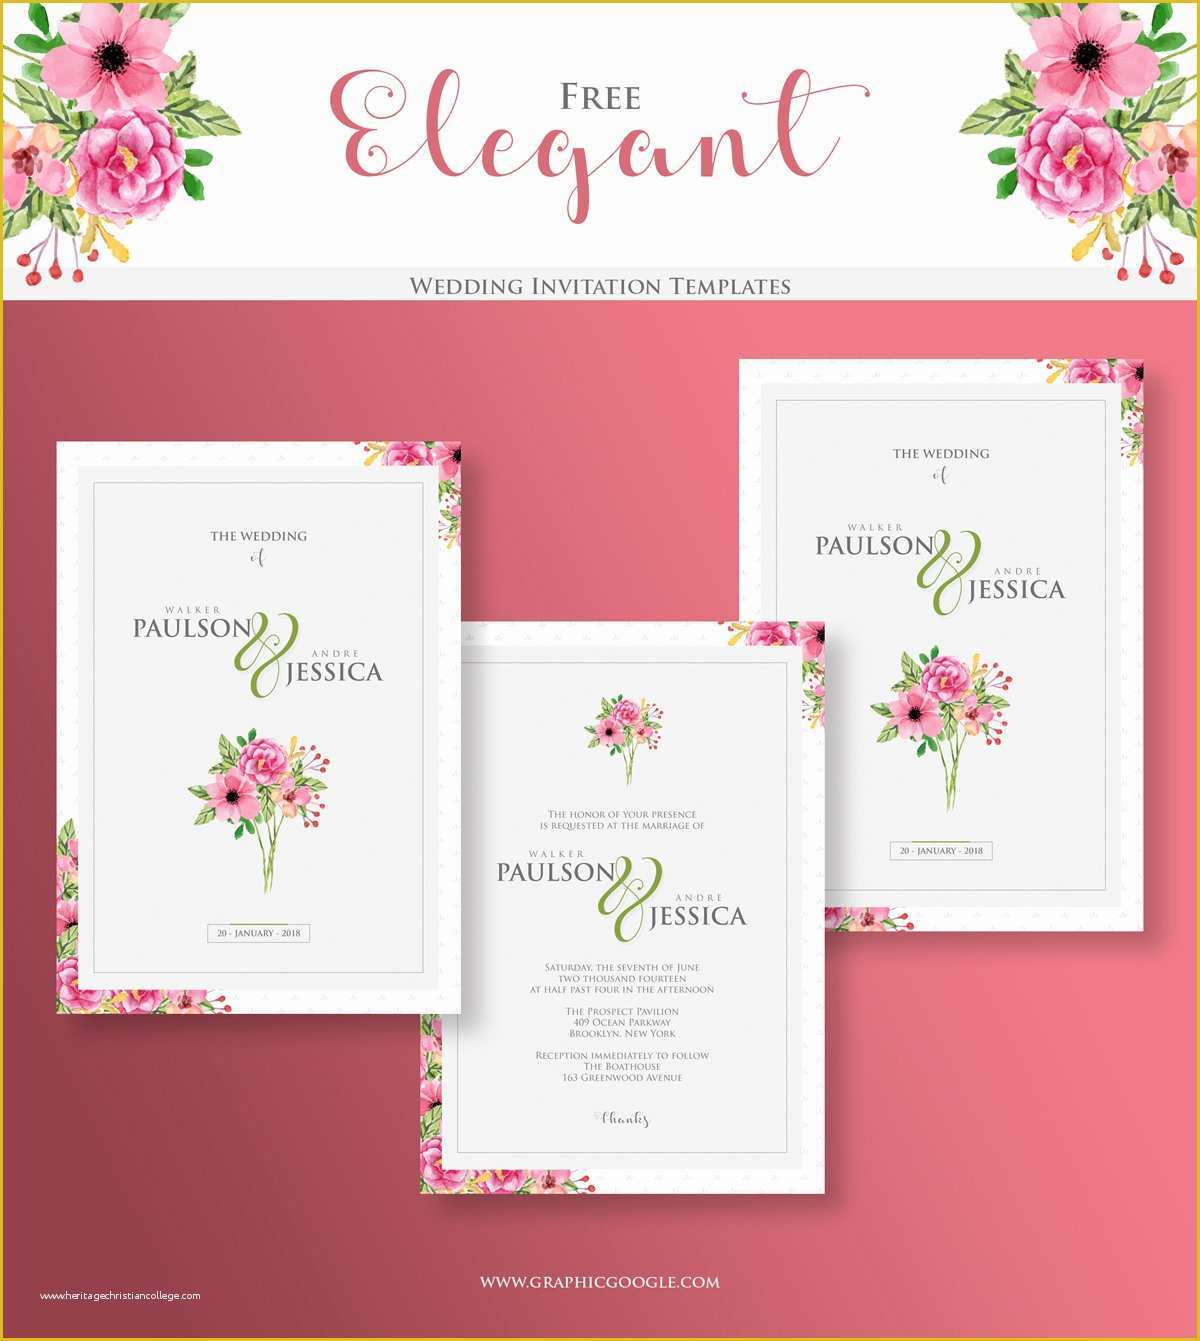 Free Wedding Templates Online Of Free Elegant Wedding Invitation Templates